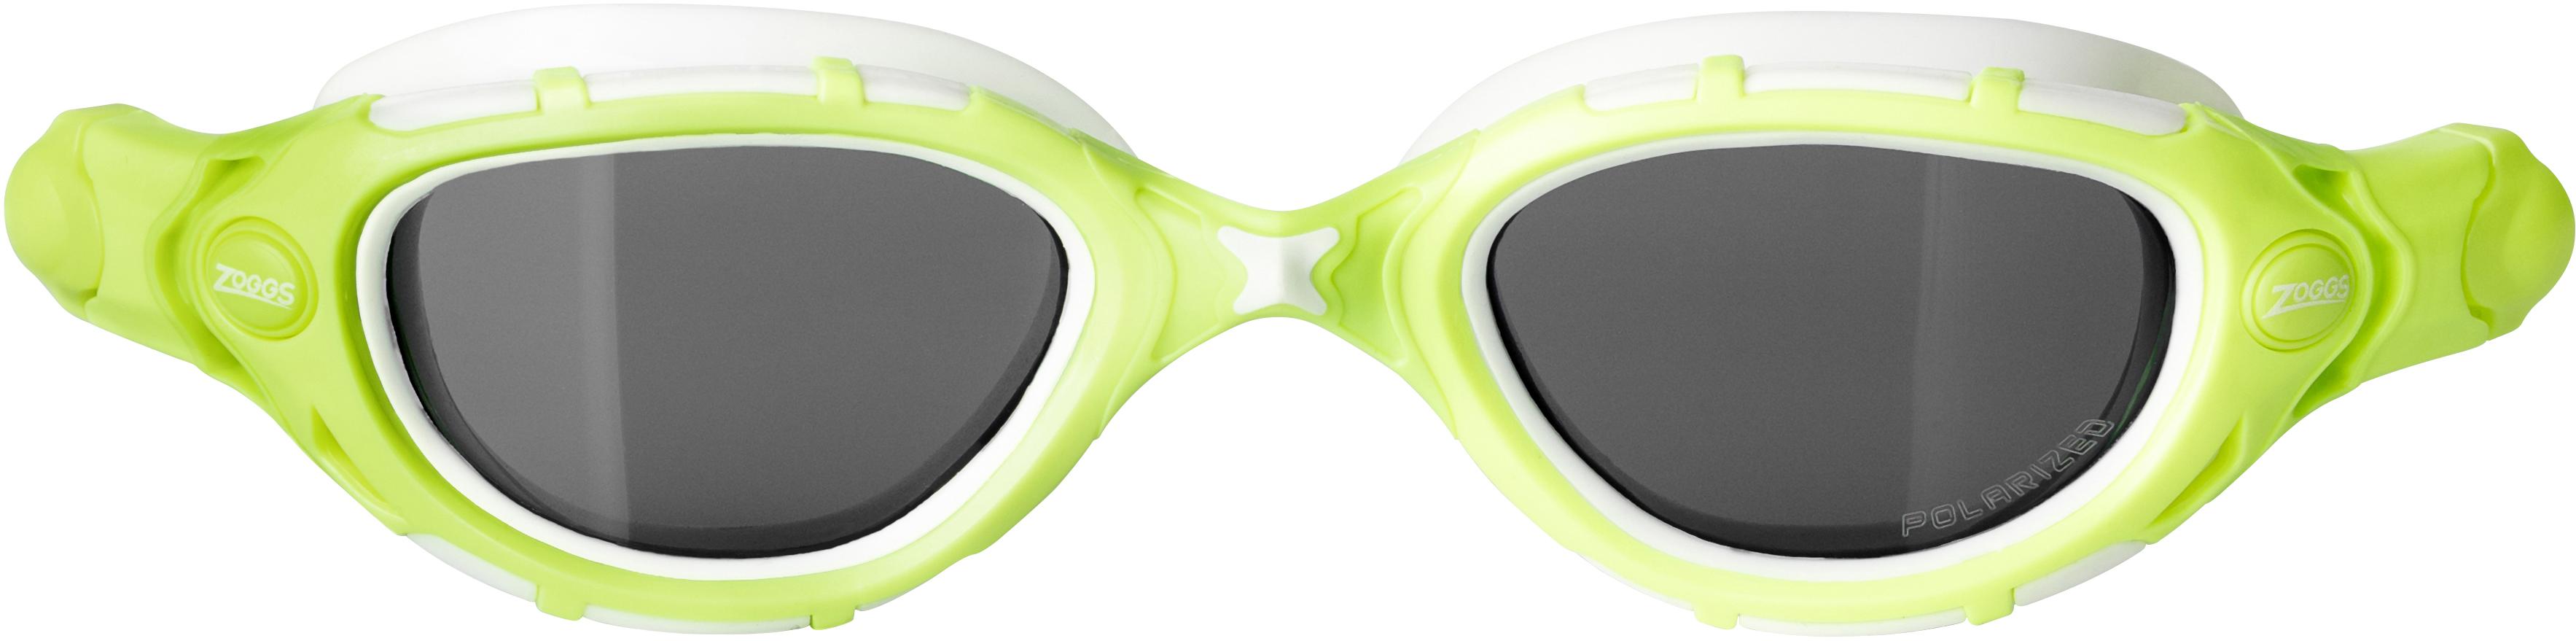 Zoggs Original Predator Flex Polarized Goggle - Lime/grey/polarized Smoke